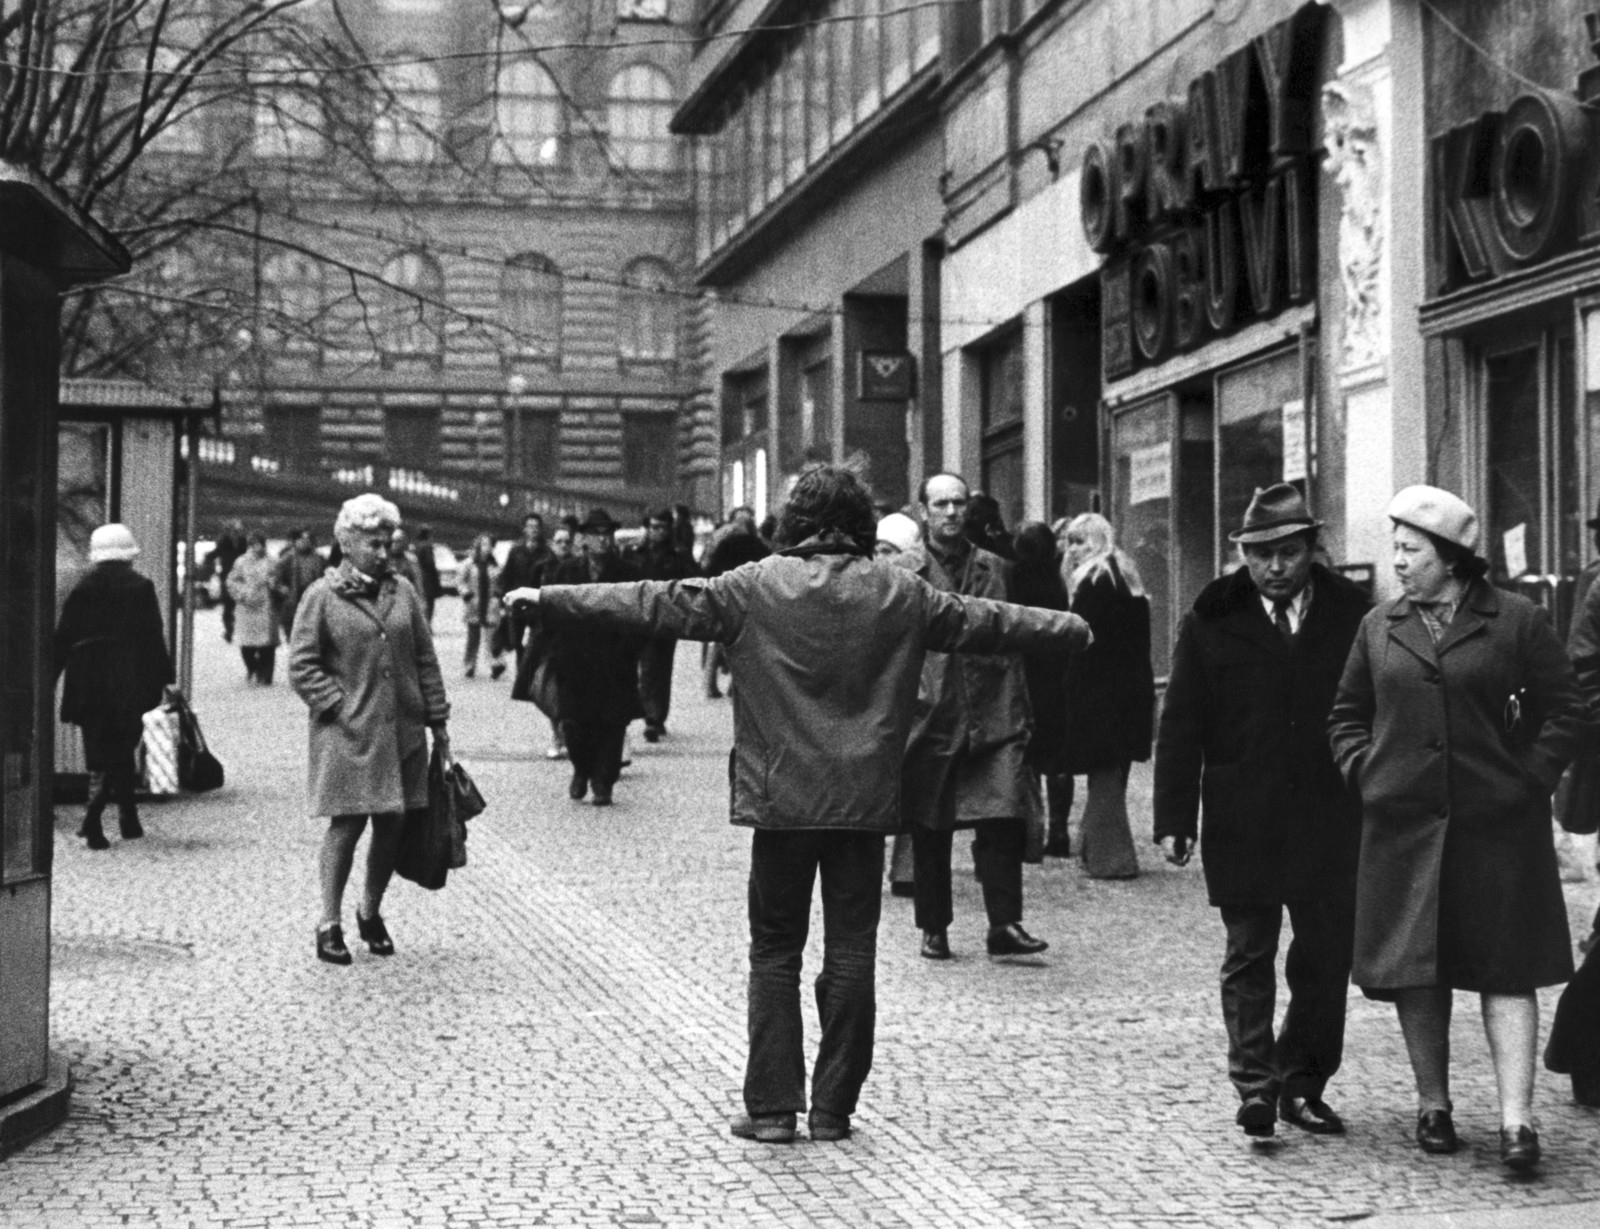 Jiř&iacute; Kovanda November 19th, 1976, Prague b/w photograph Credits: gb agency, Paris and Krobath, Wien/Berlin